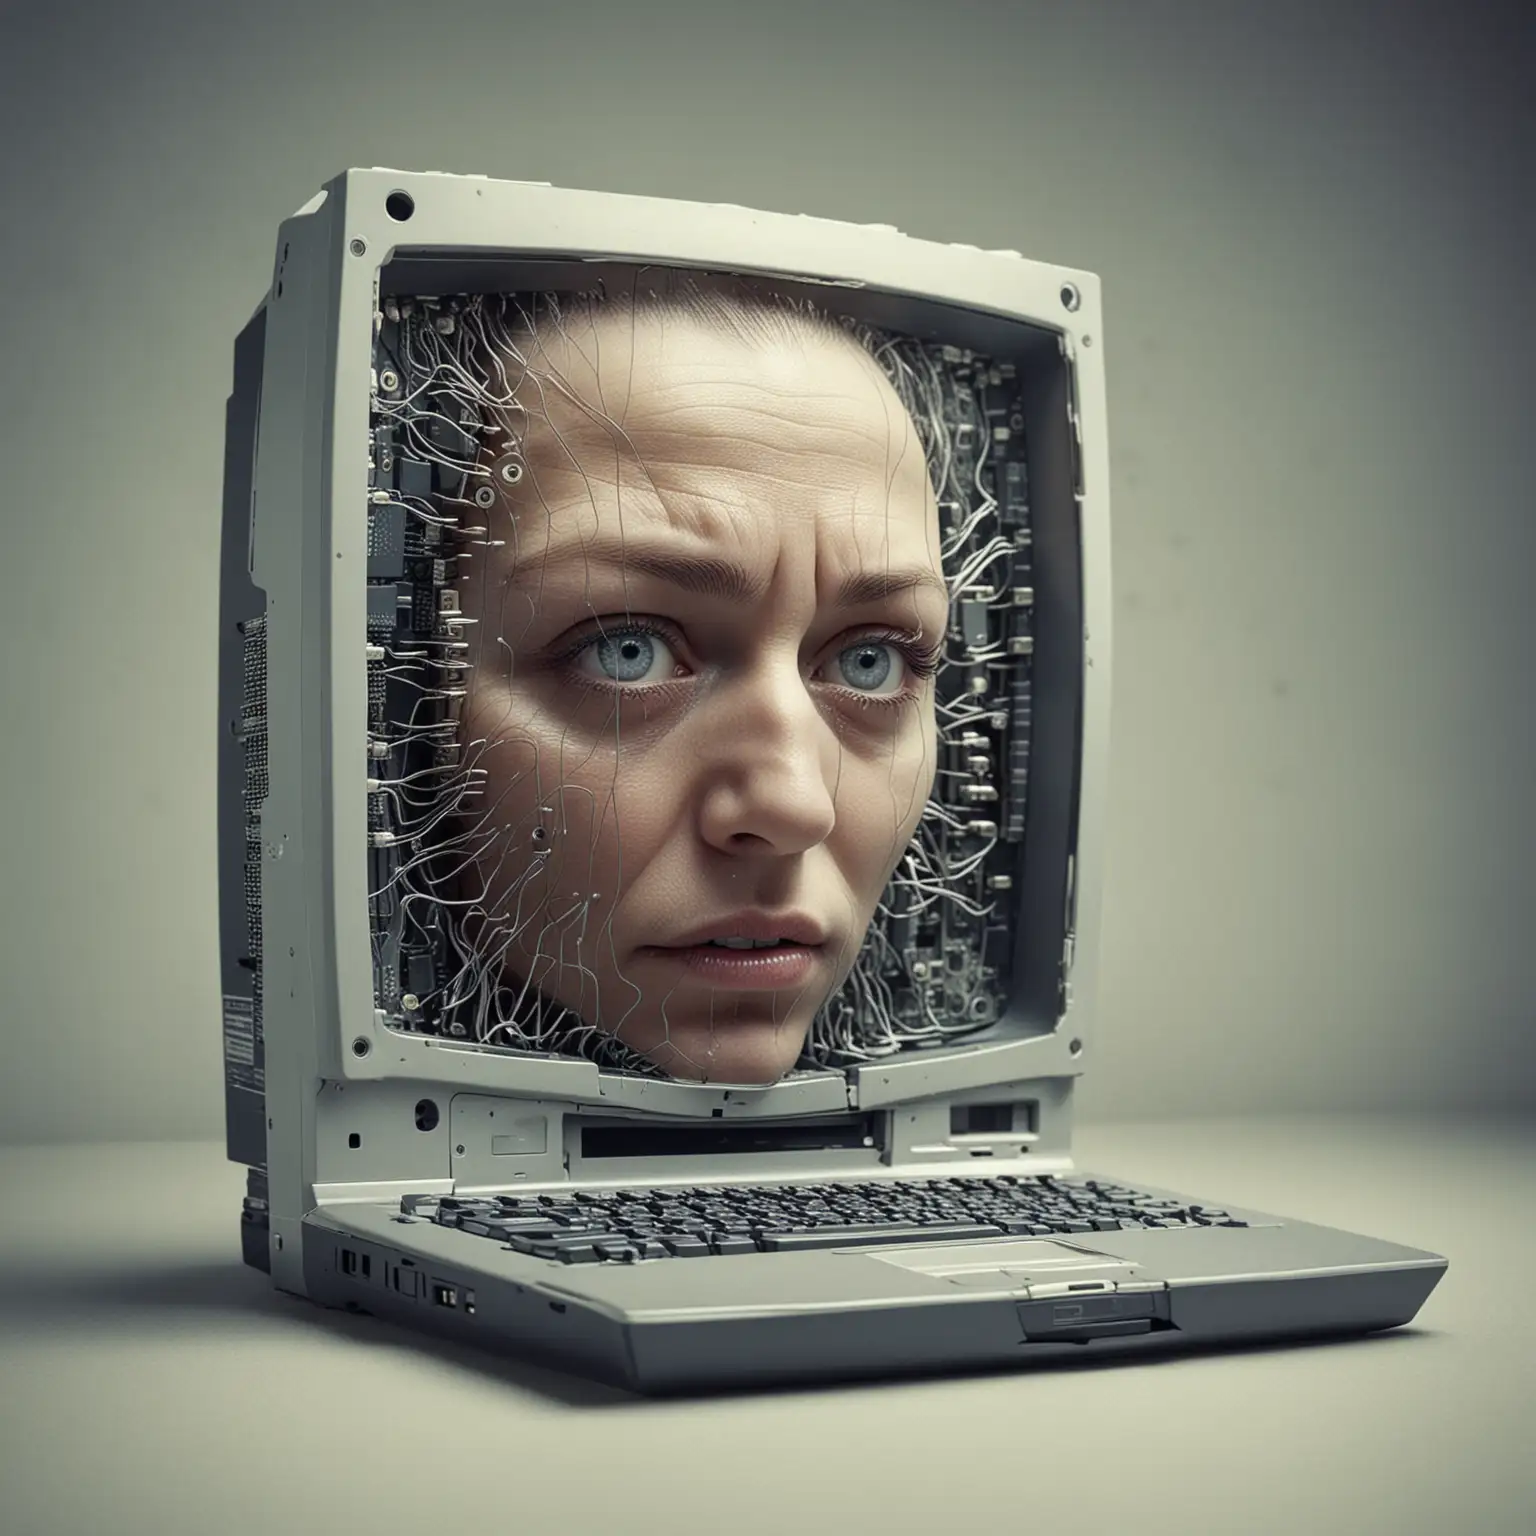 a face stuck inside a computer, surreal